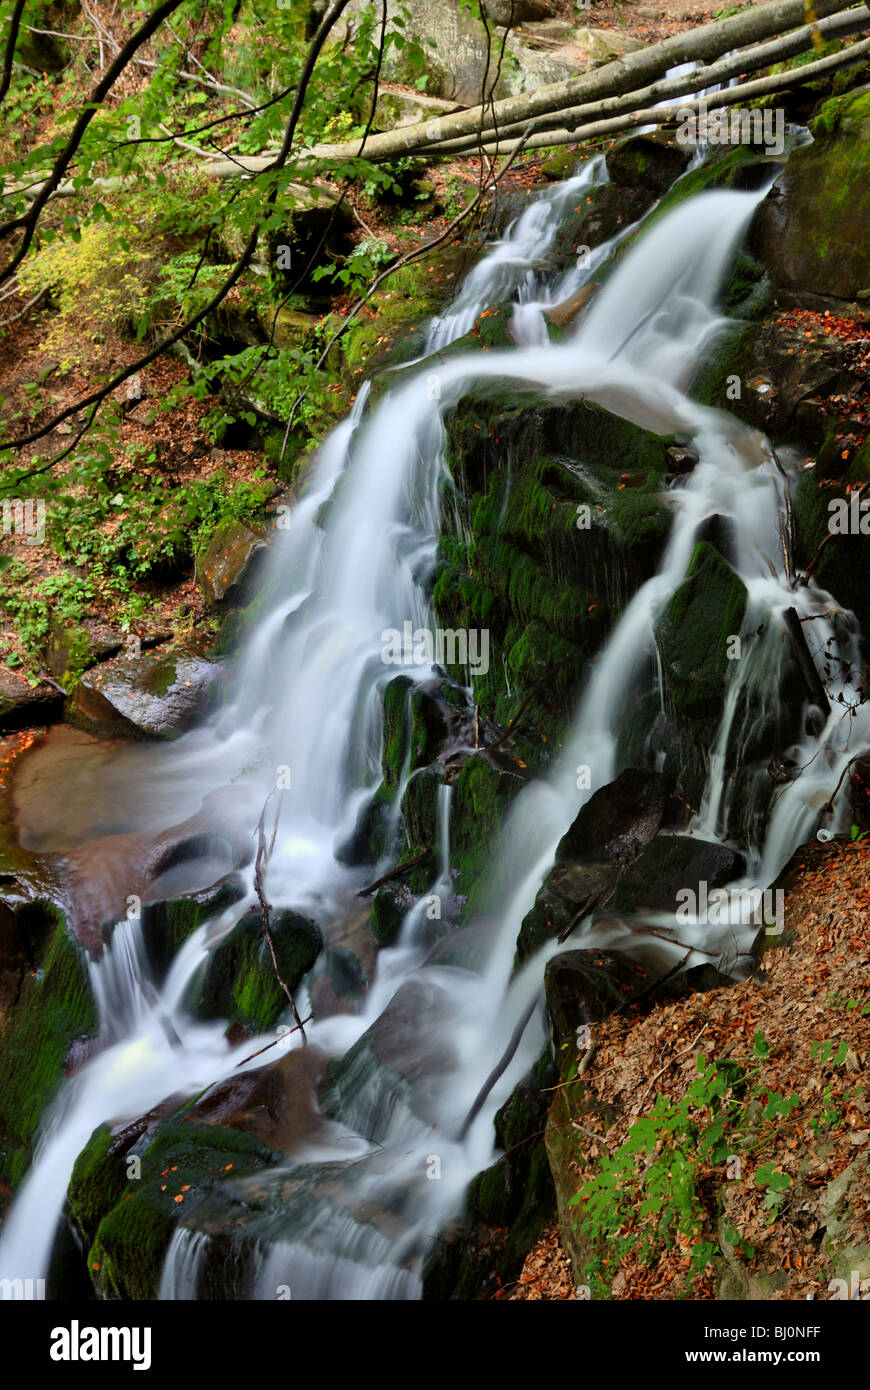 shipot waterfall in zakarpatie region of ukraine Stock Photo